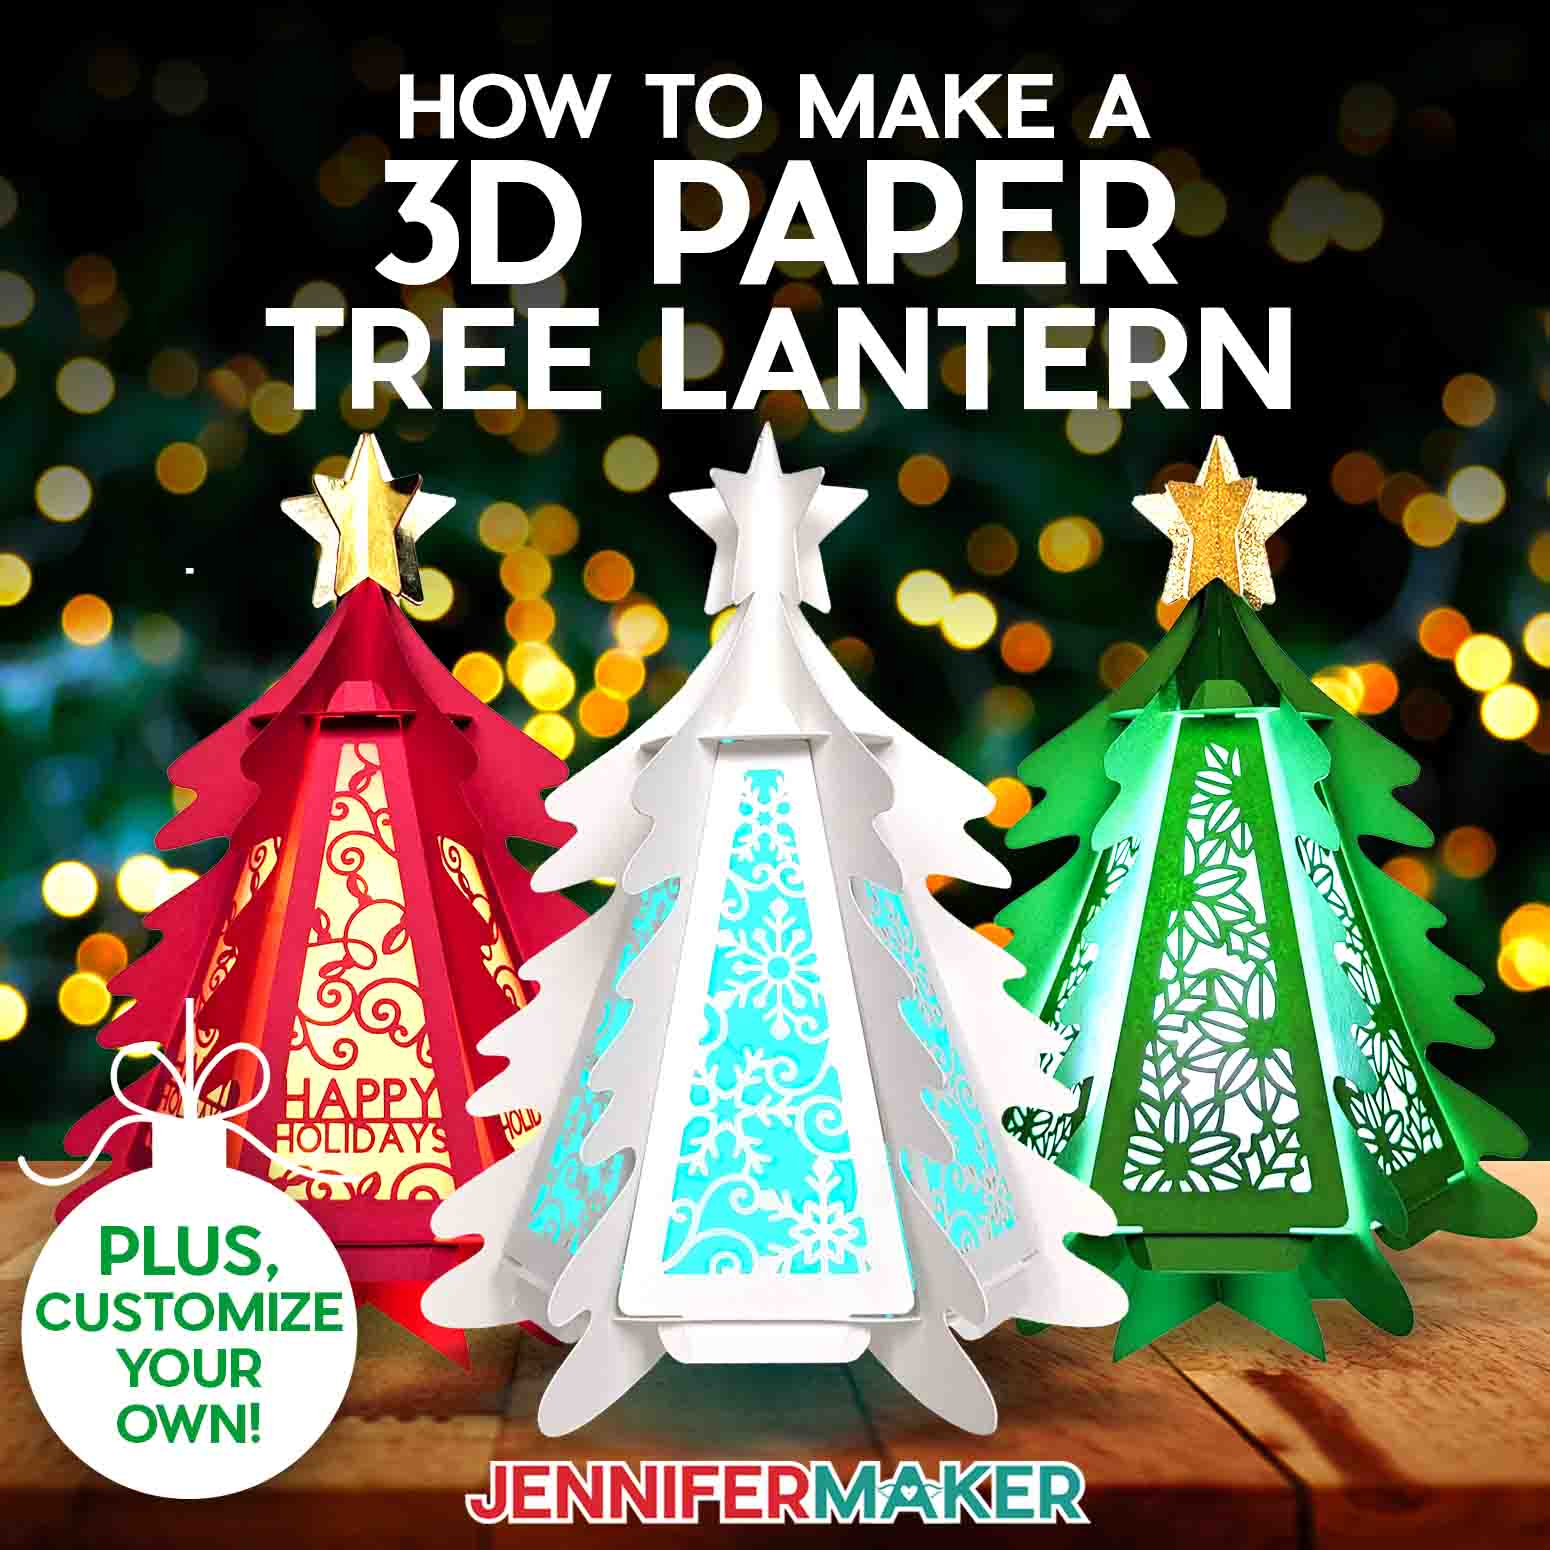 Craft a Custom 3D Paper Tree Lantern for Christmas!